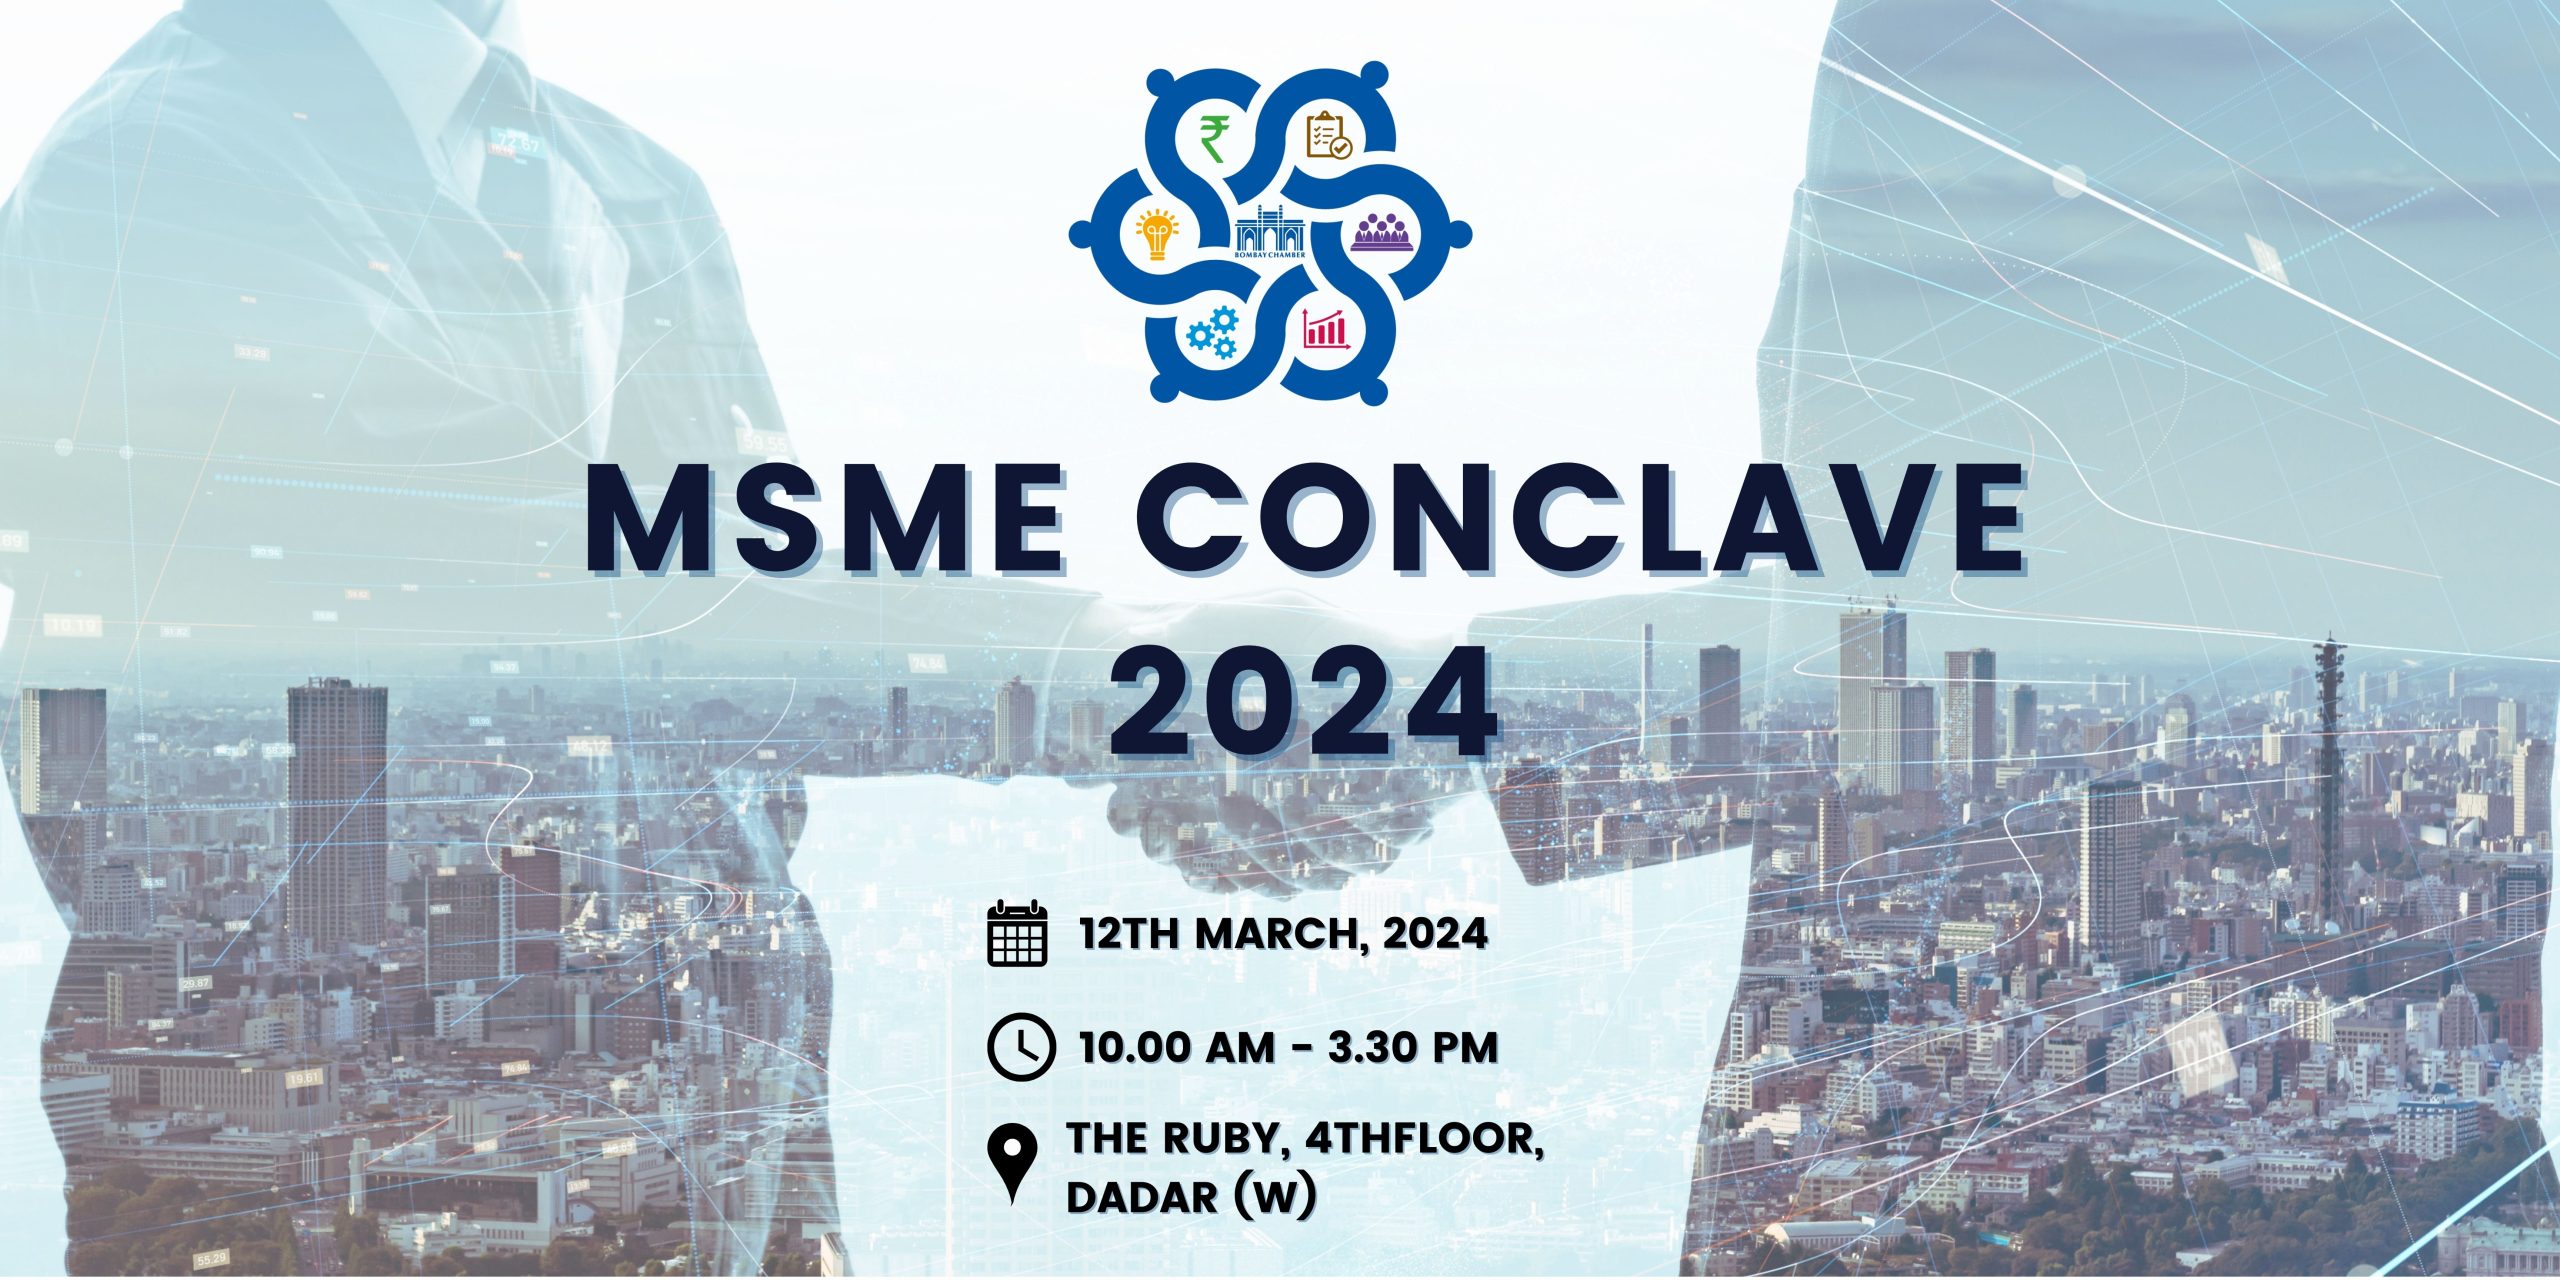 MSME Conclave 2024